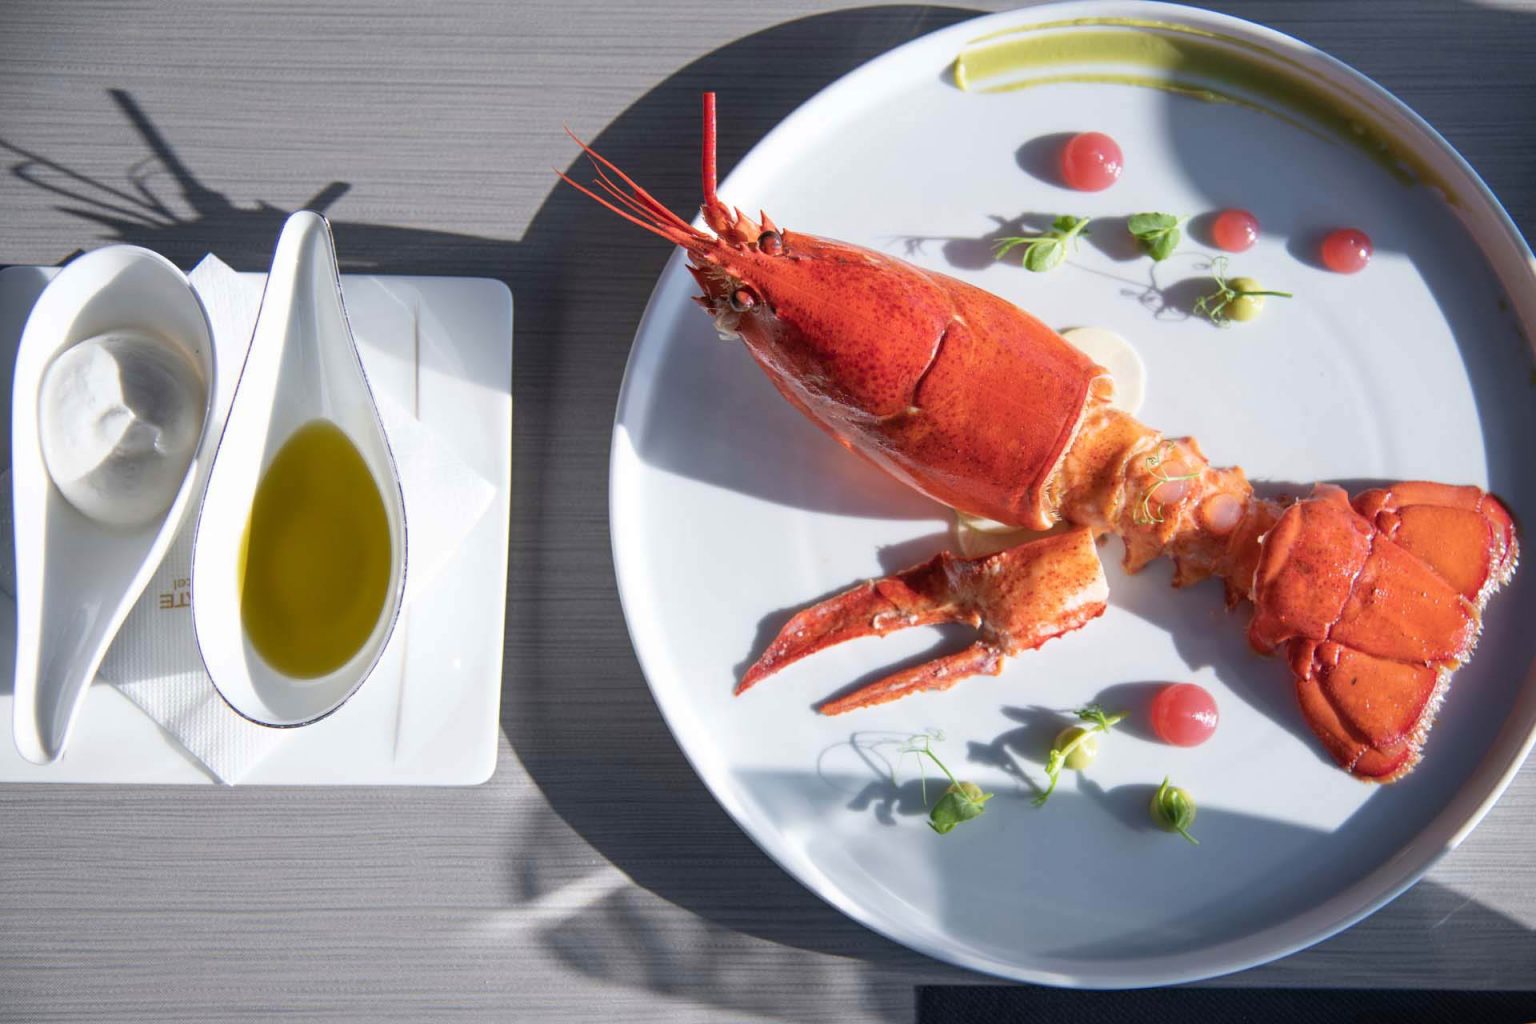 Poseidon Restaurant - lobster